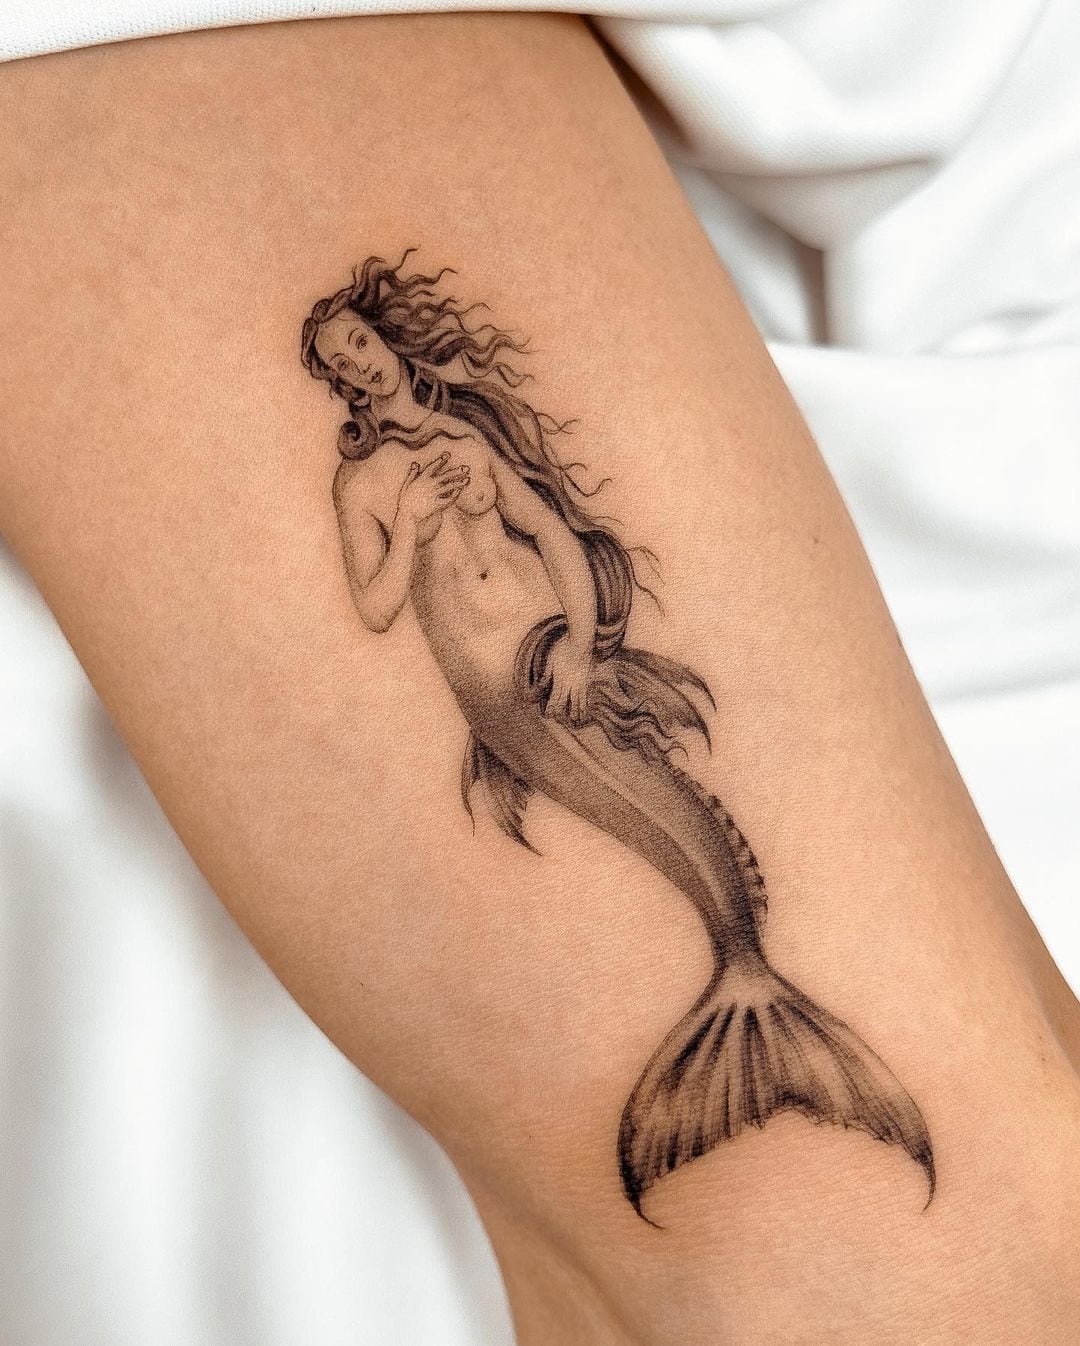 Mermaid Temporary Tattoo (Set of 3) – Small Tattoos